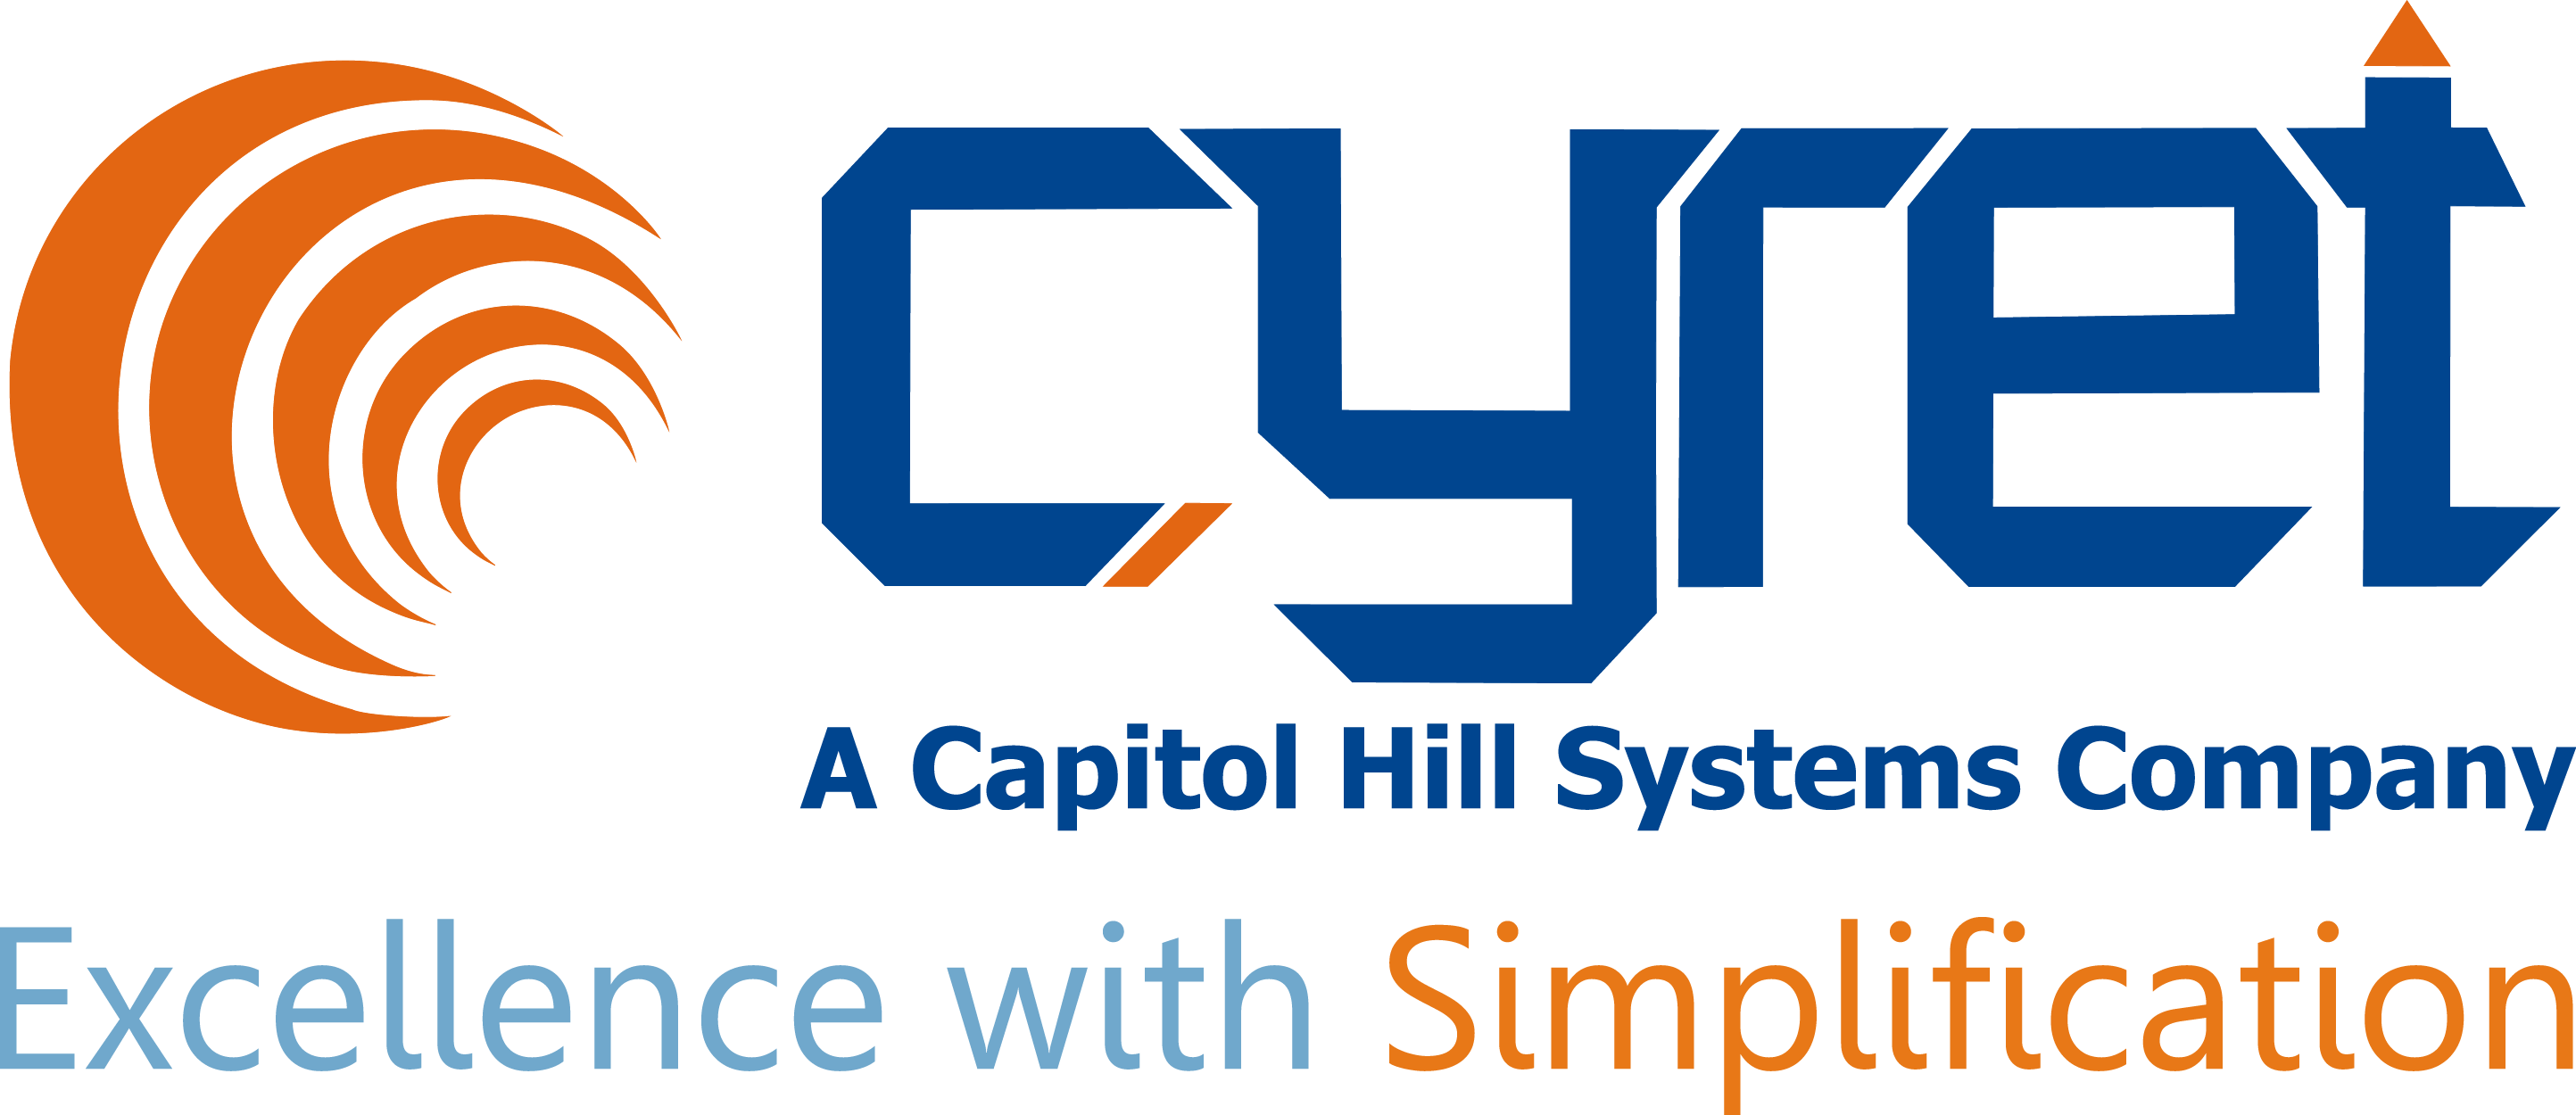 Cyret Technologies